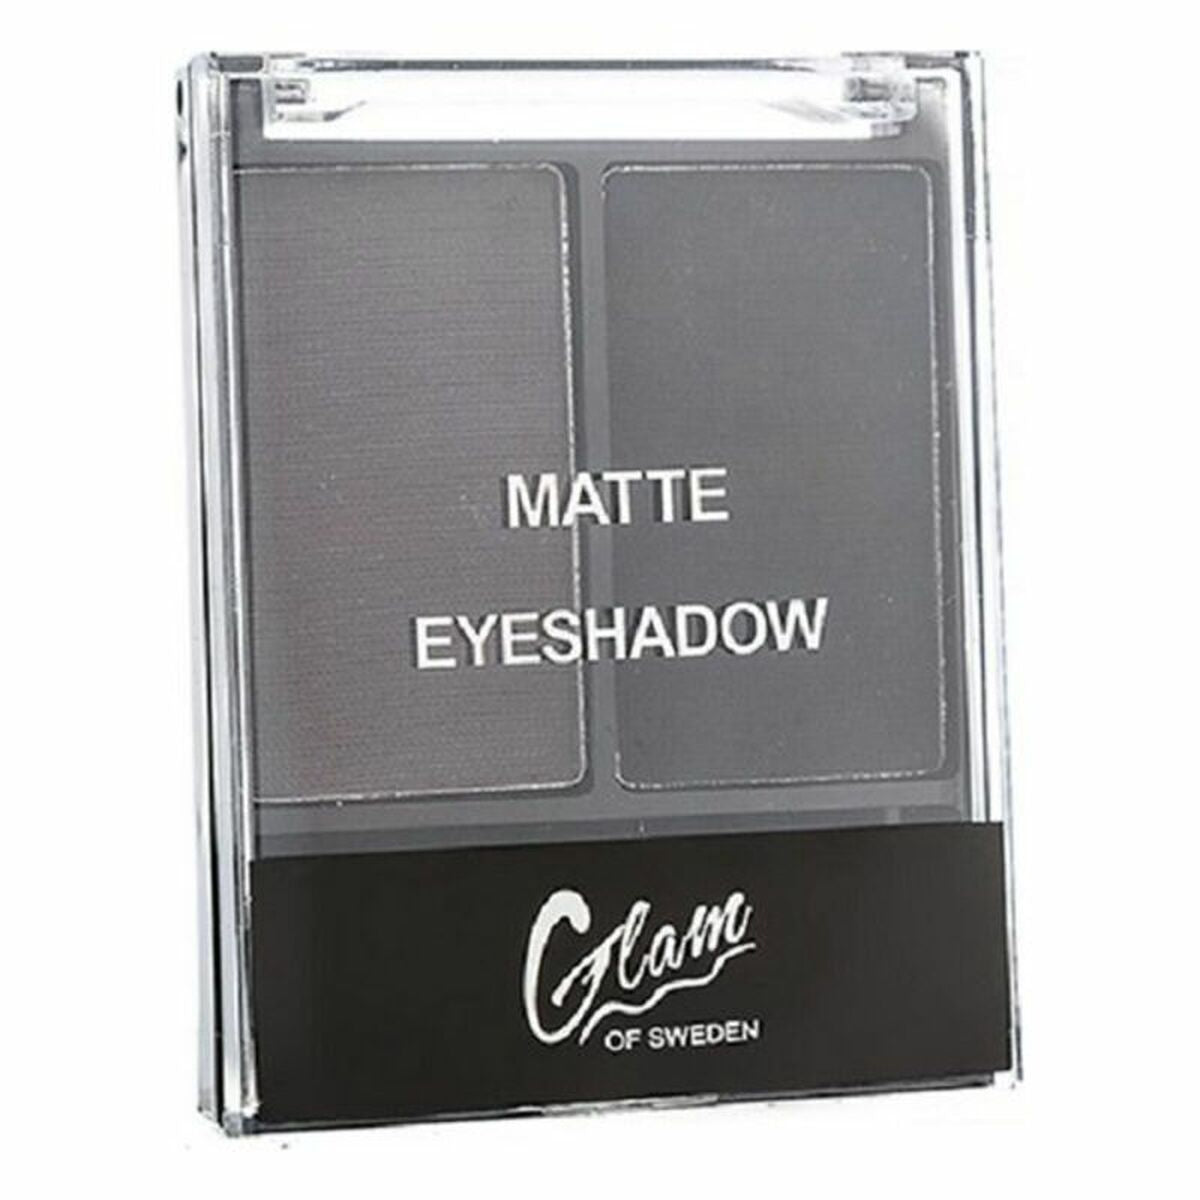 Lidschatten Matte Glam Of Sweden Eyeshadow matte 03 Dramatic (4 g) - CA International  